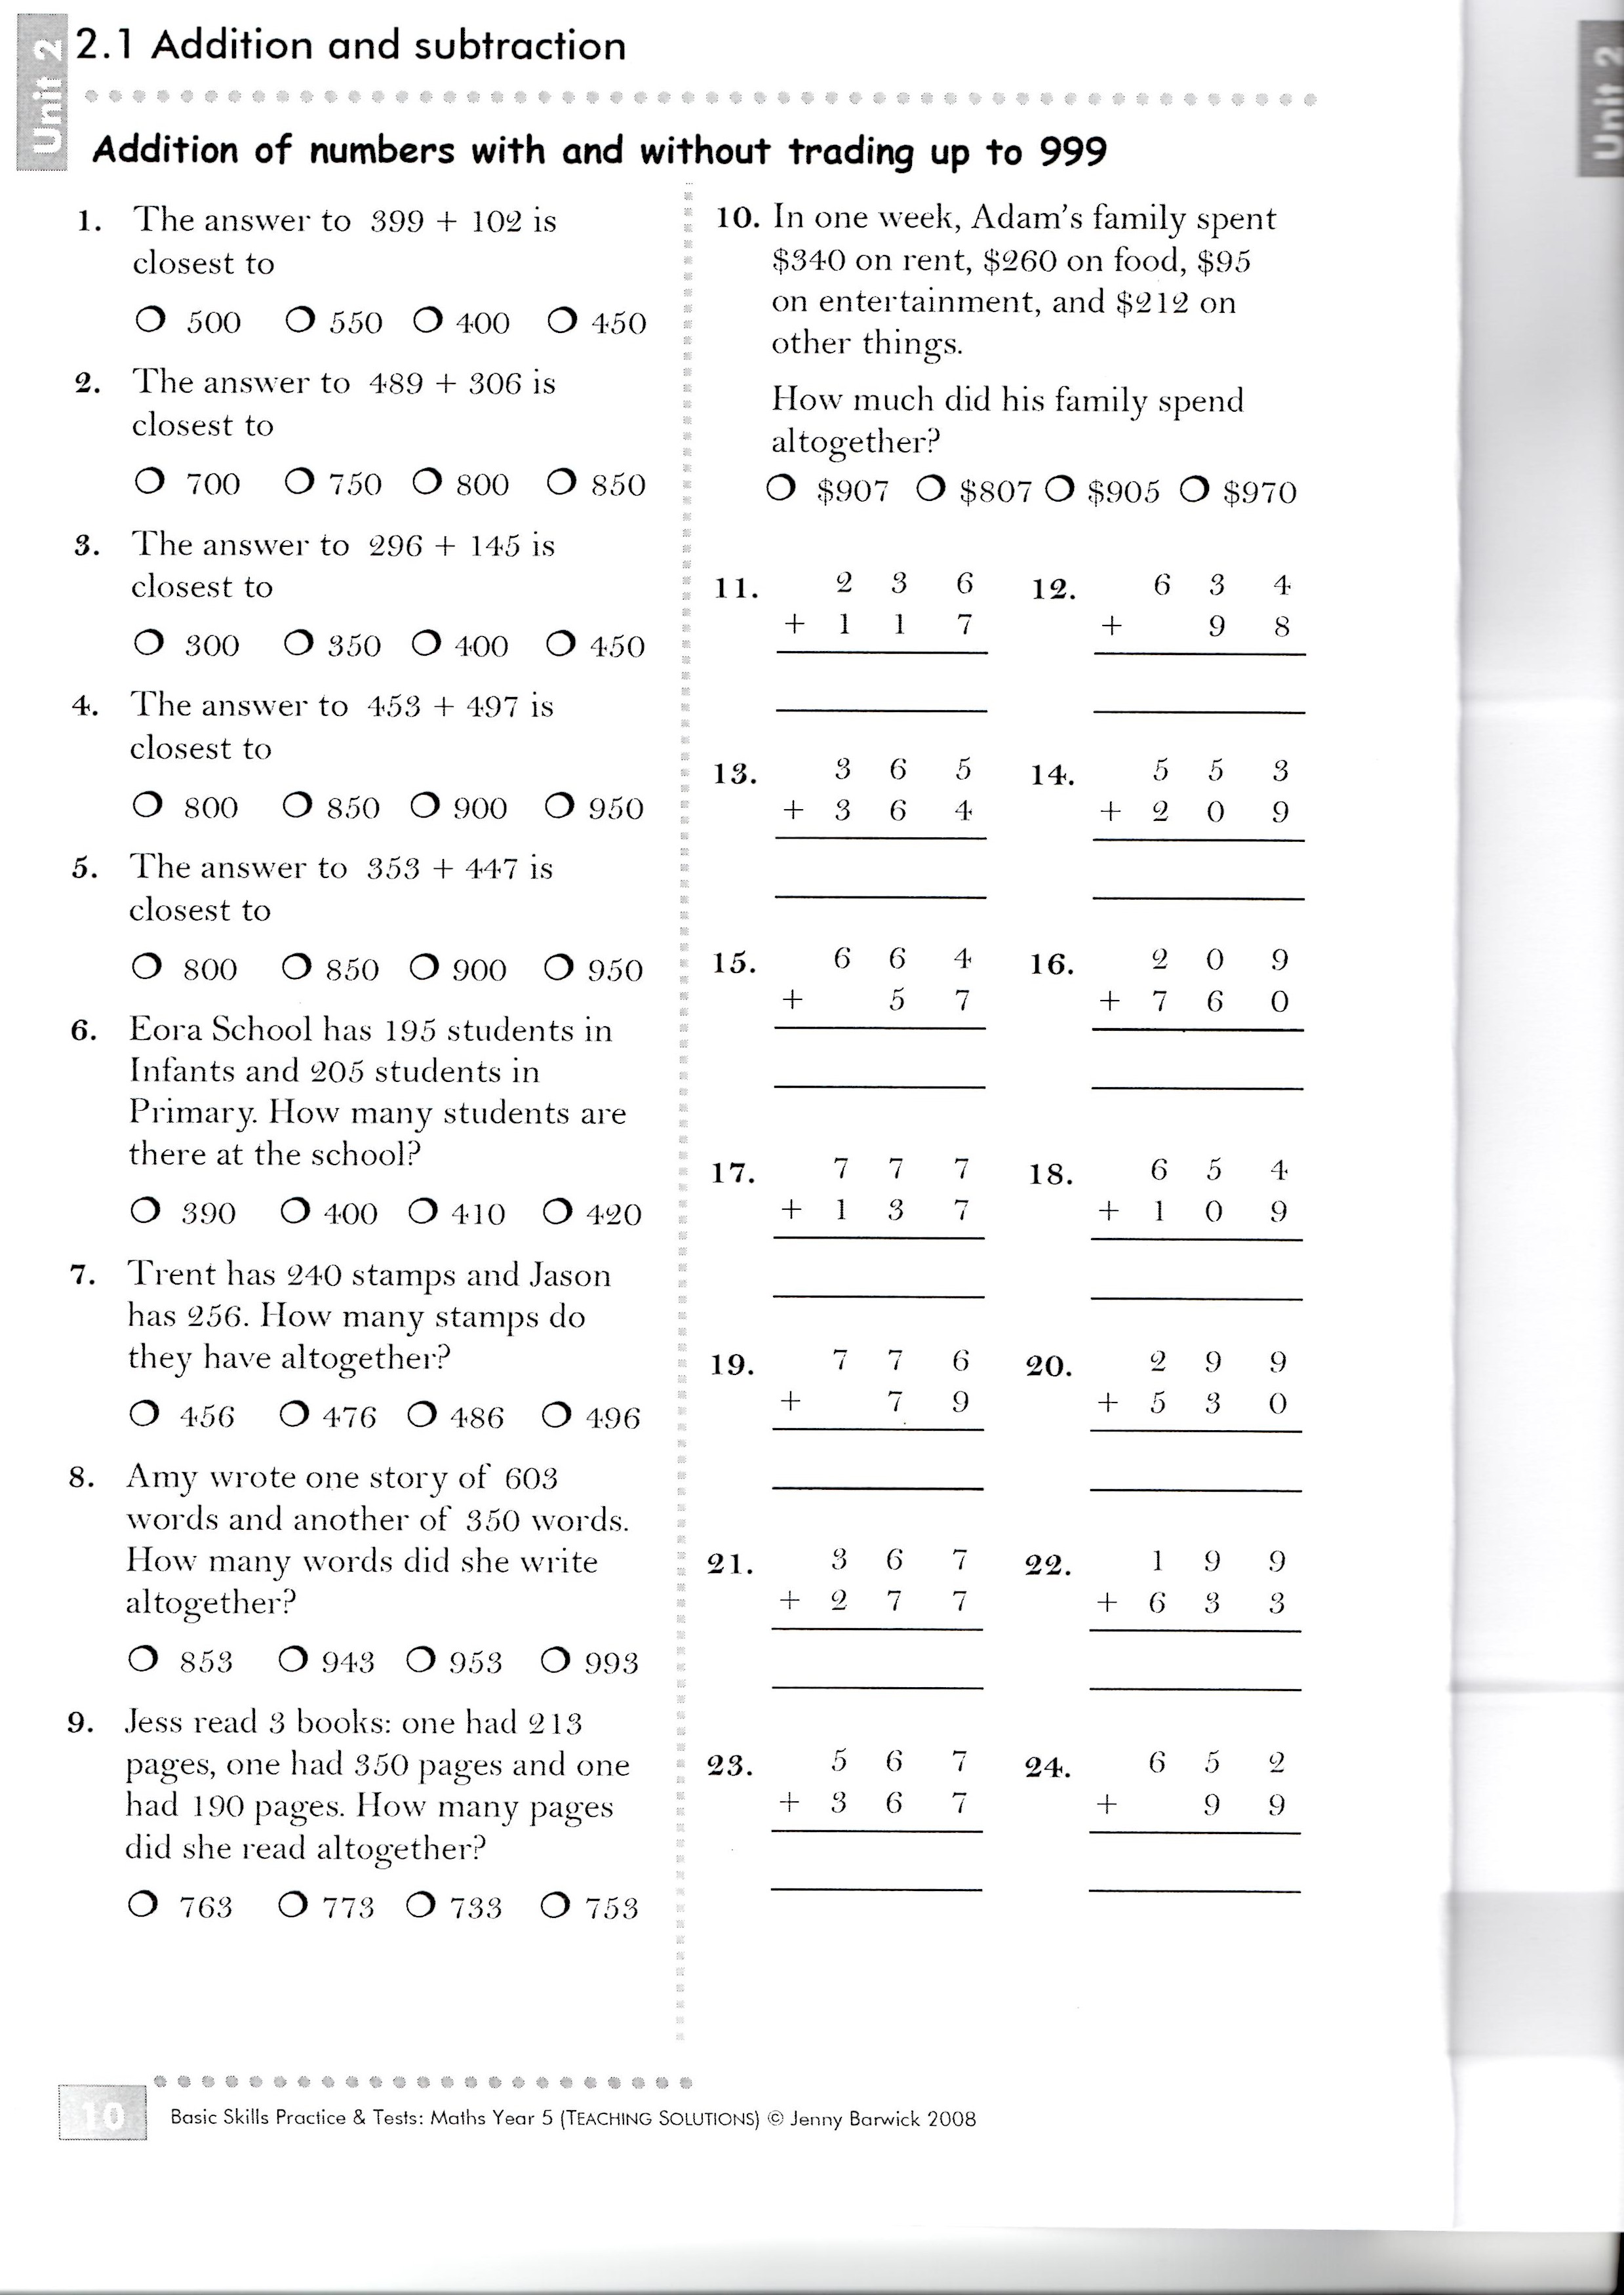 best-basic-math-skills-assessment-printable-harper-blog-28820-hot-sex-picture